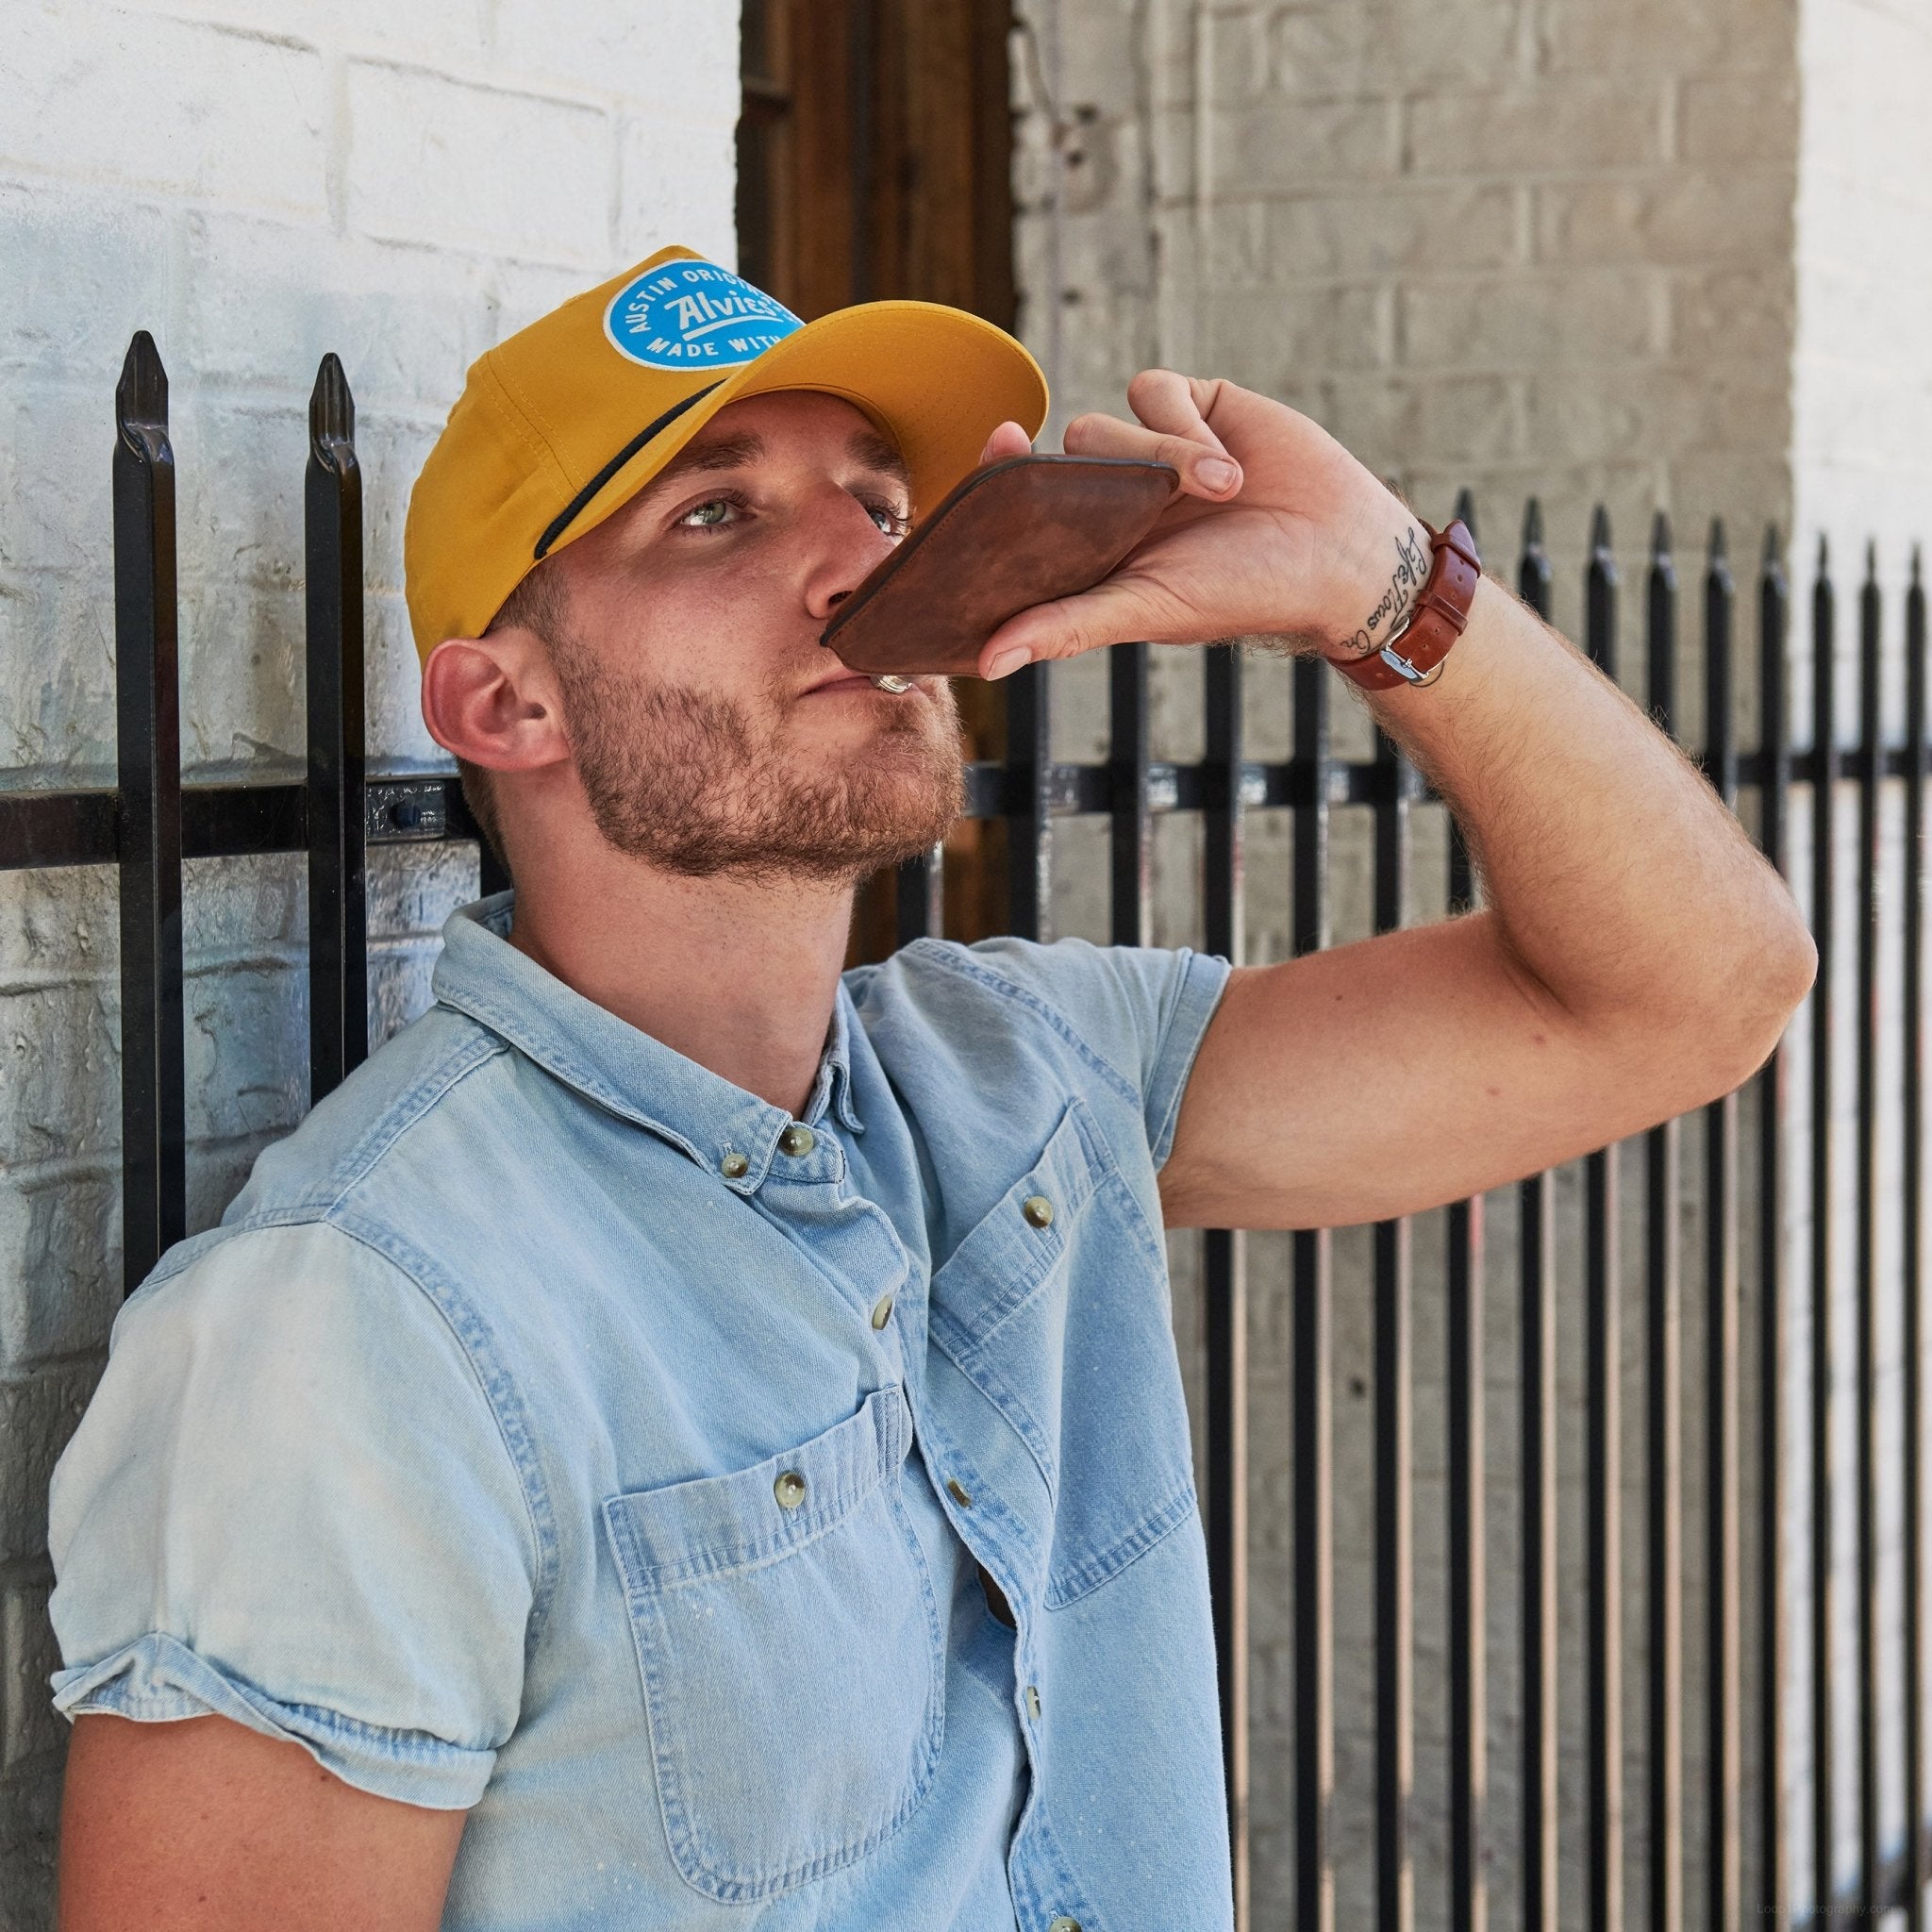 Austin Originals Snapback Hat - Alvies, Yellowbelly Sap Sucker